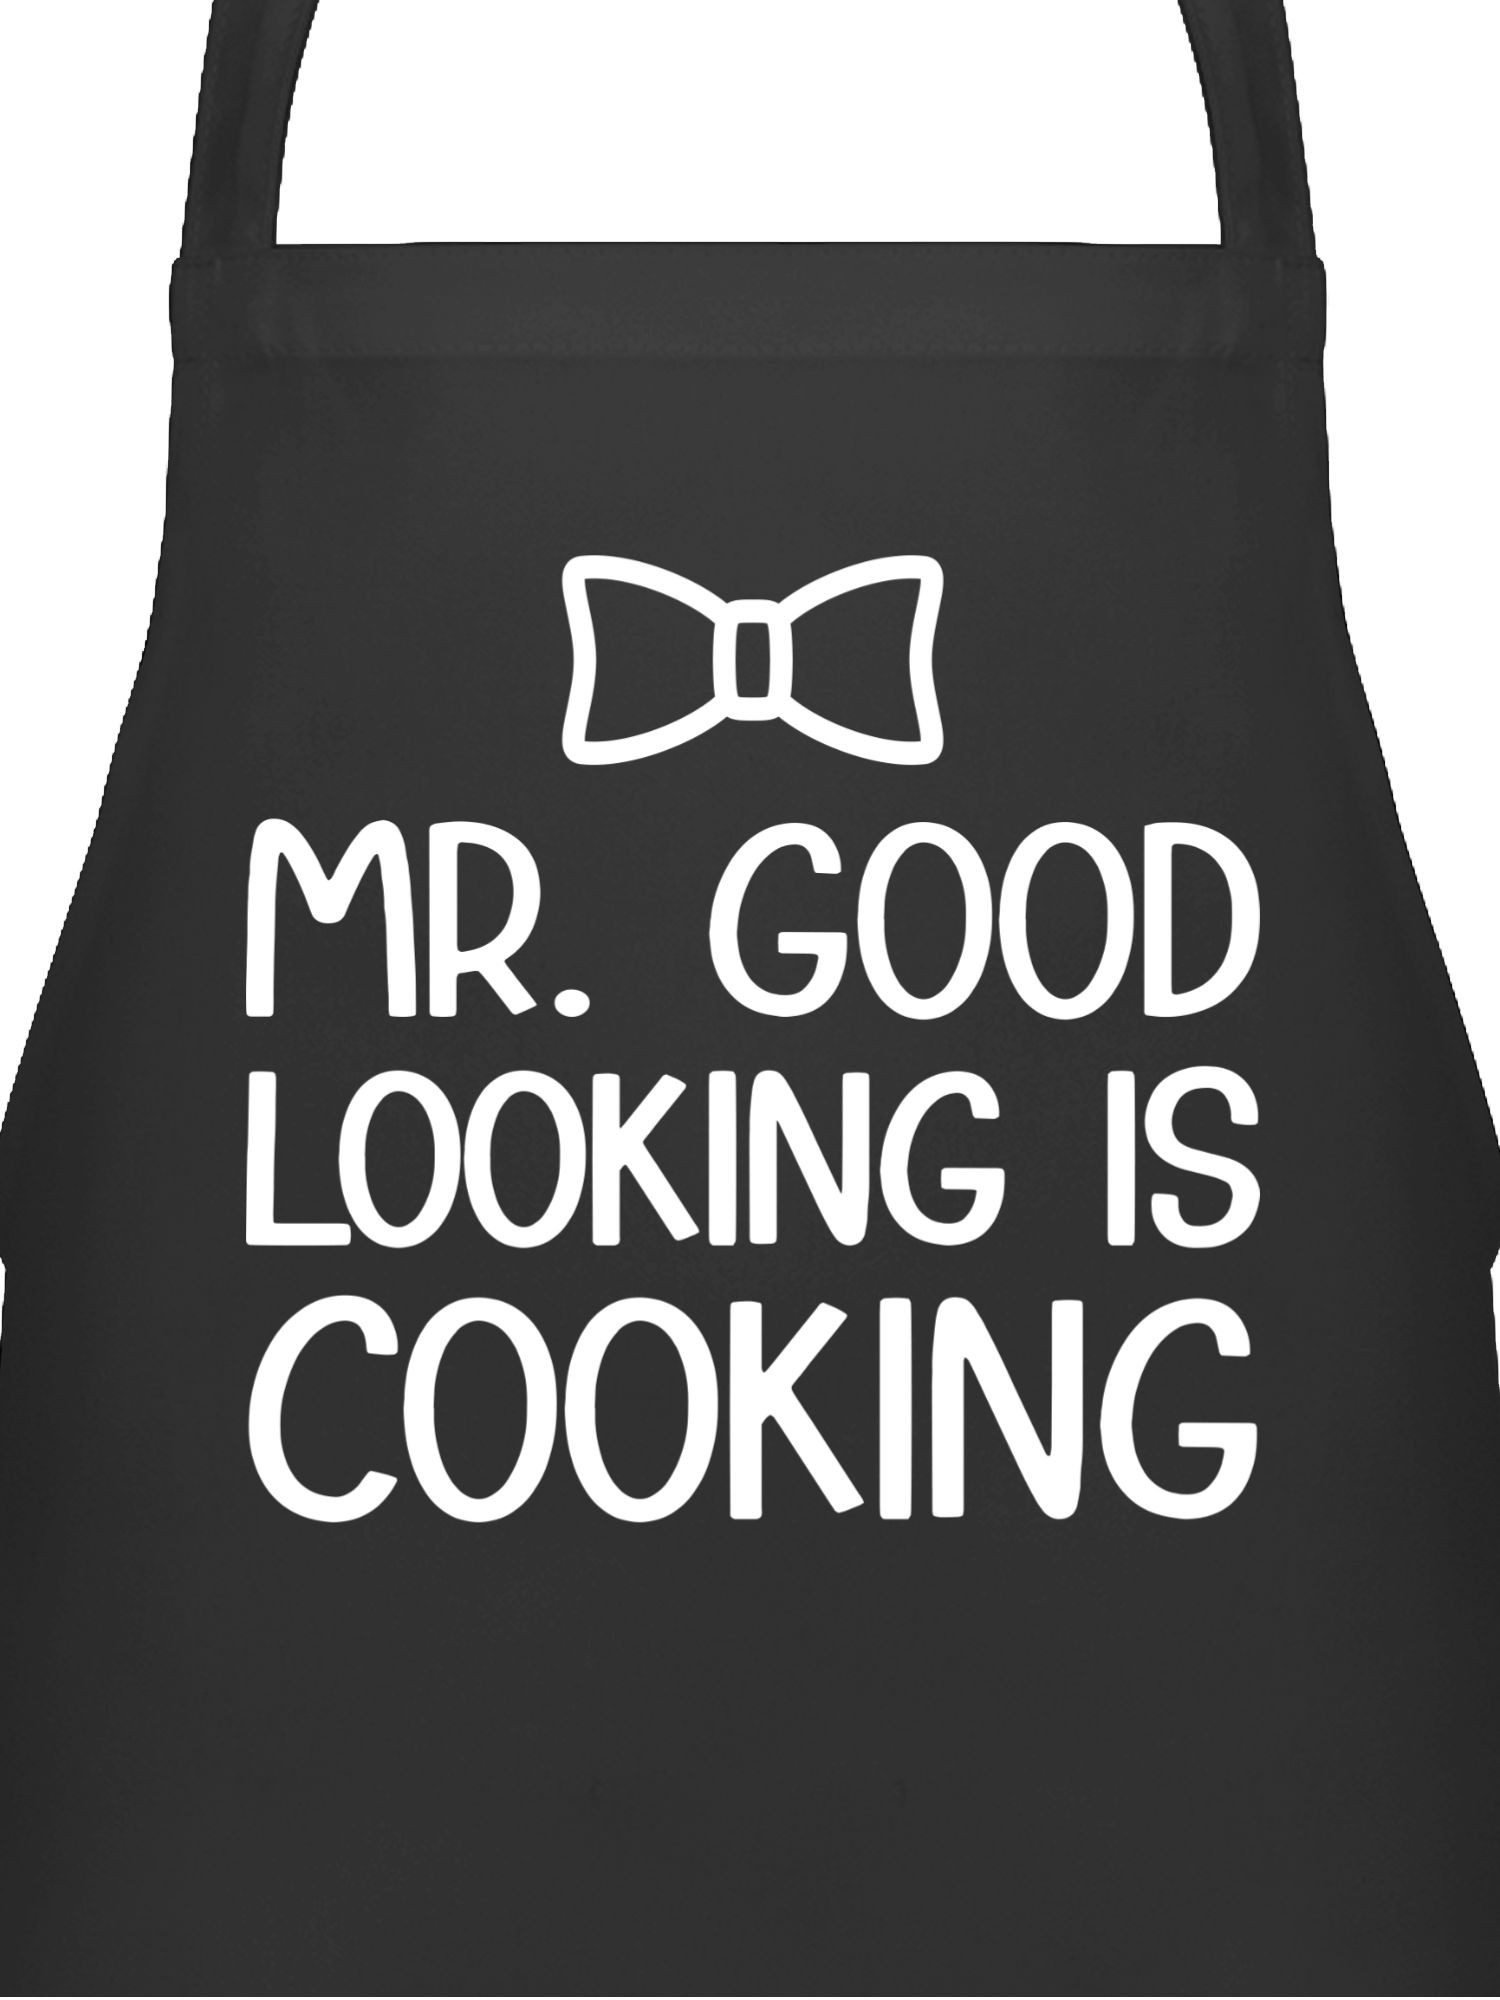 Shirtracer Kochschürze Mr. Good looking is cooking - Geschenke Männer Vatertag Weihnachten Ge, (1-tlg), Kochschürze Herren Männer